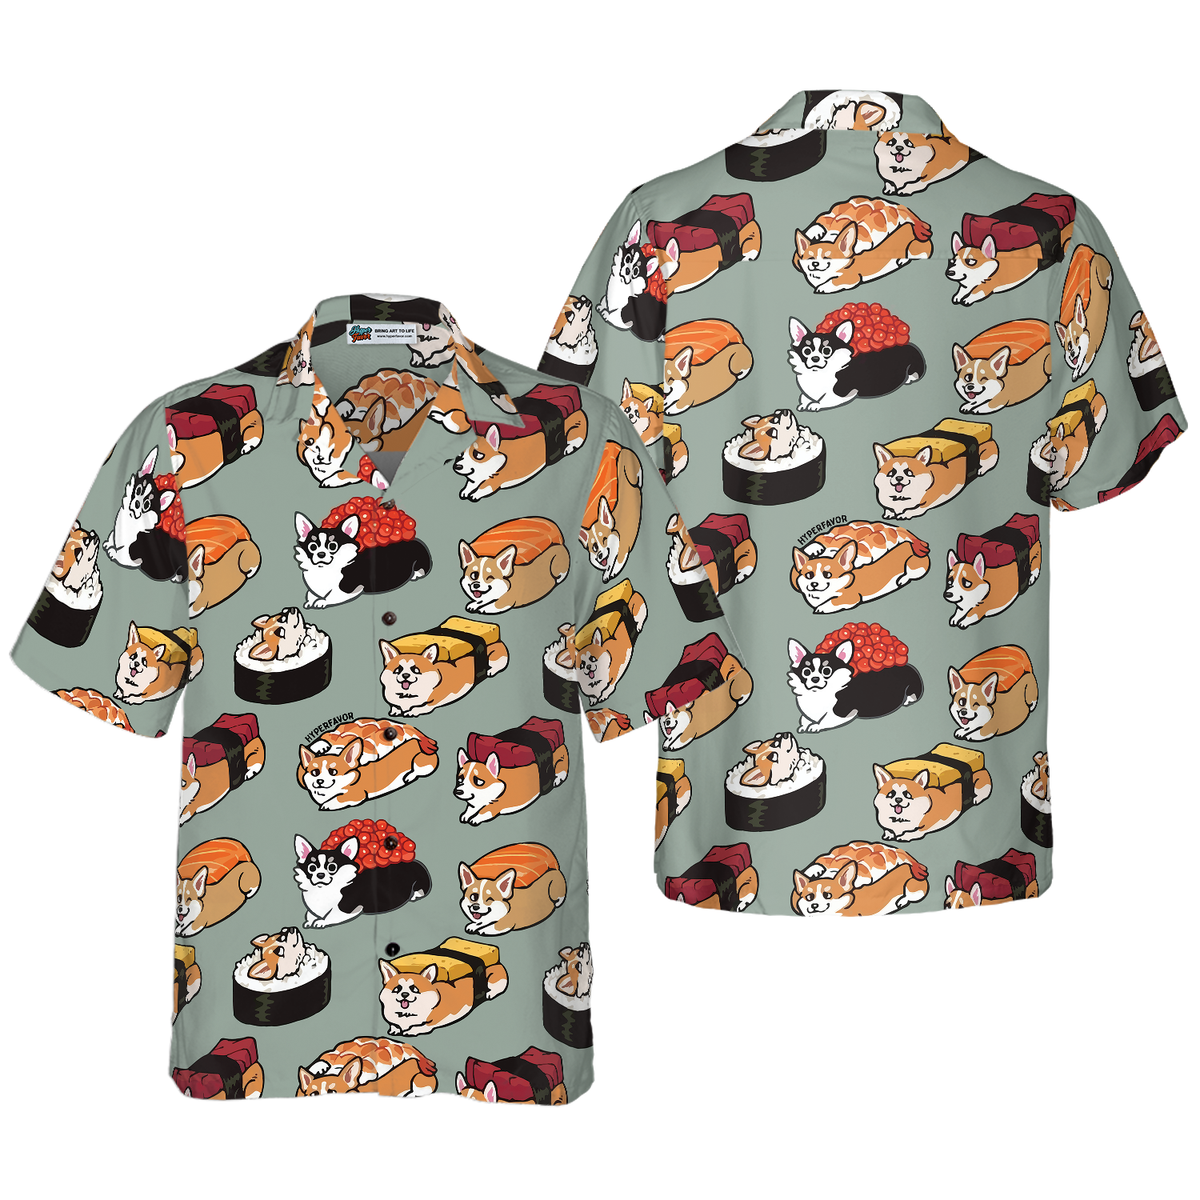 Corgi Hawaiian Shirt, Sushi Corgi Aloha Shirt For Men - Perfect Gift For Corgi Lovers, Husband, Boyfriend, Friend, Family